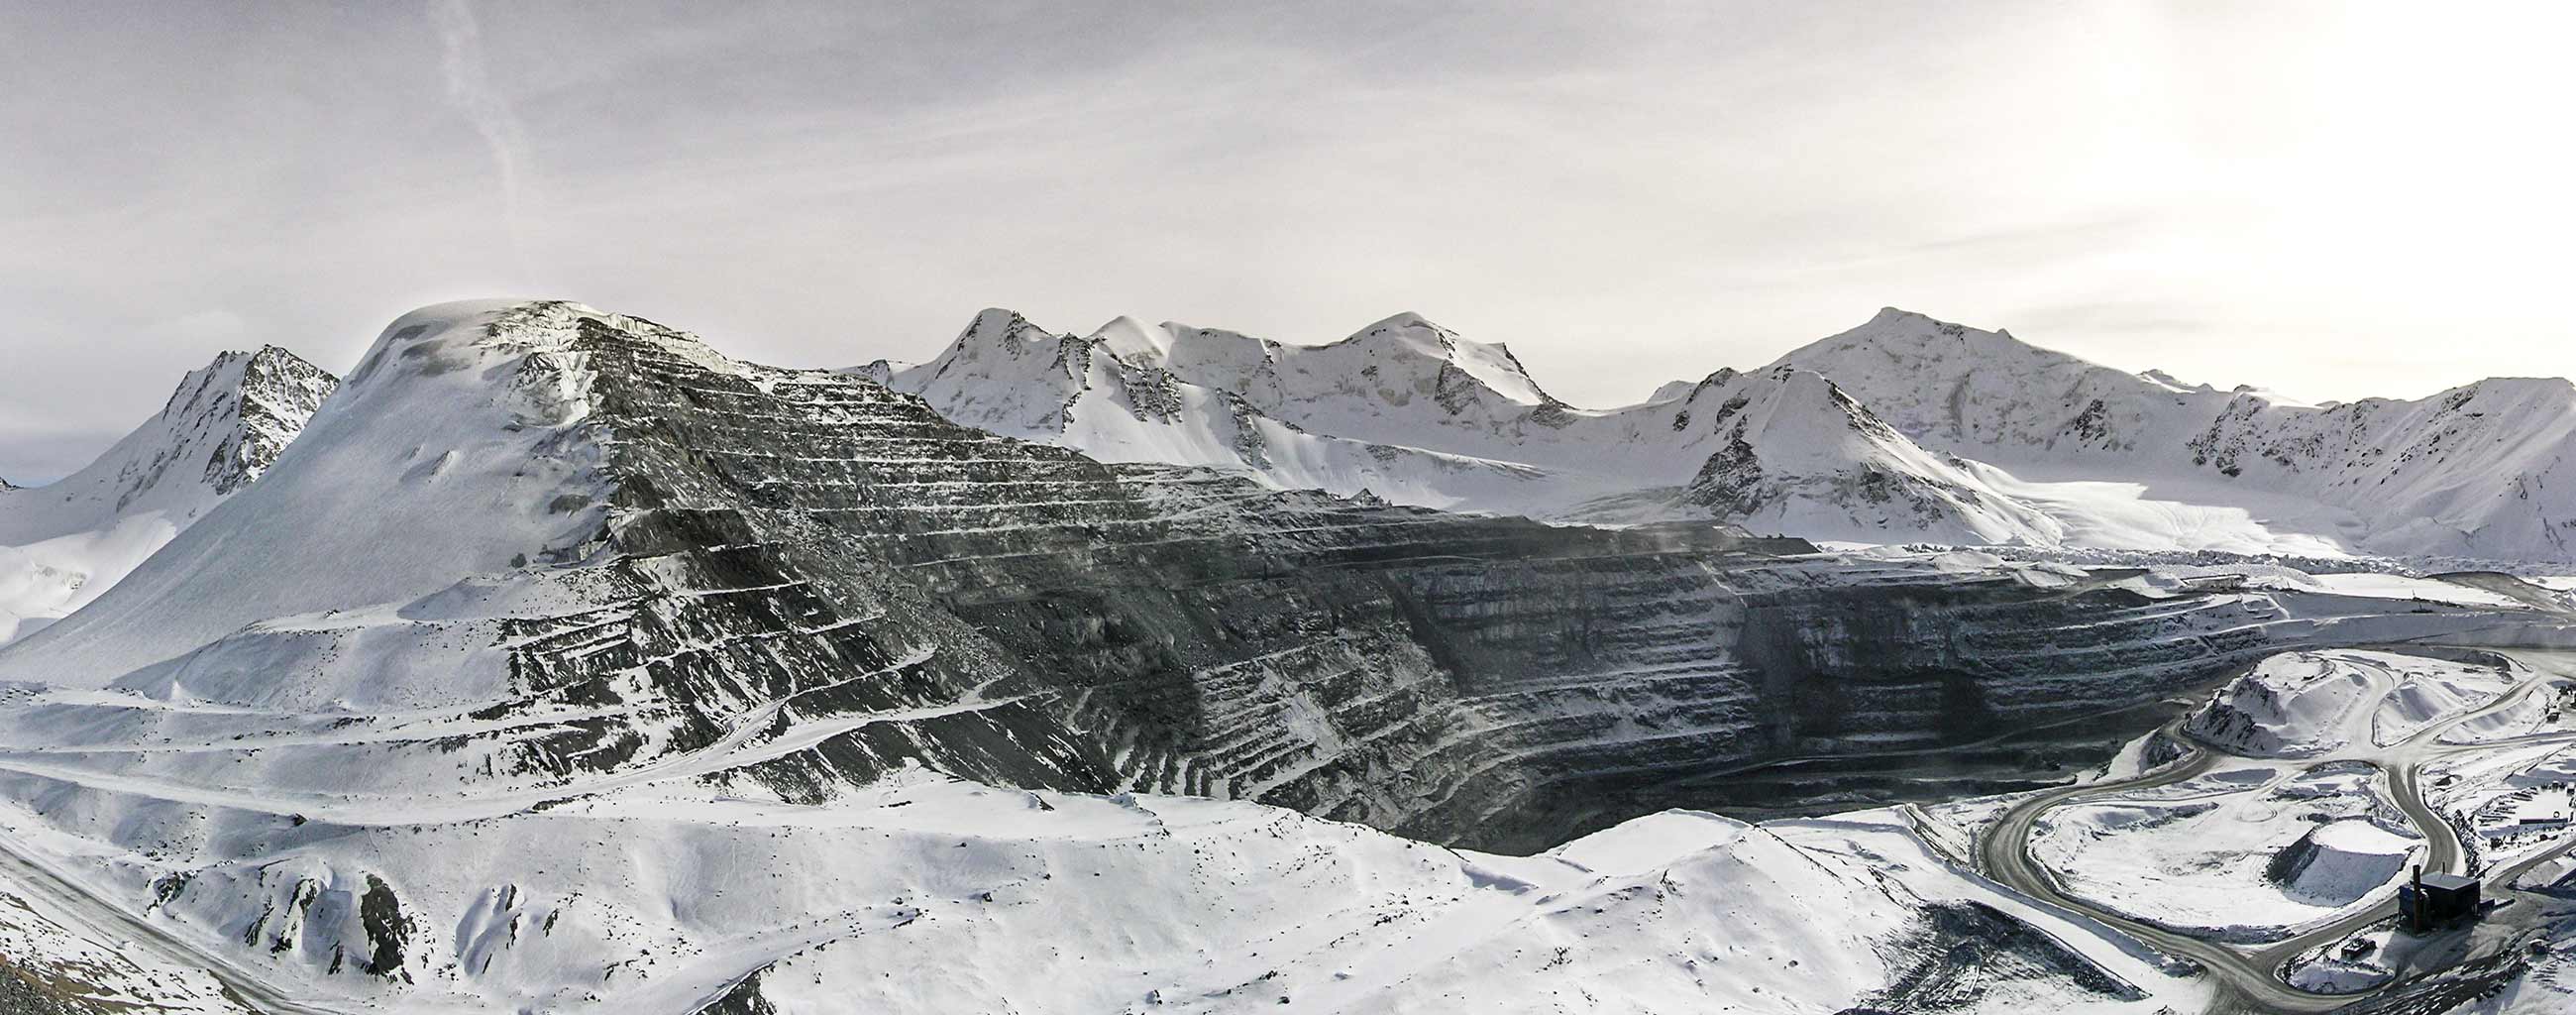 Panorama of the Kumtor gold mine. Photo: Micheal Karavanov / Wikimedia